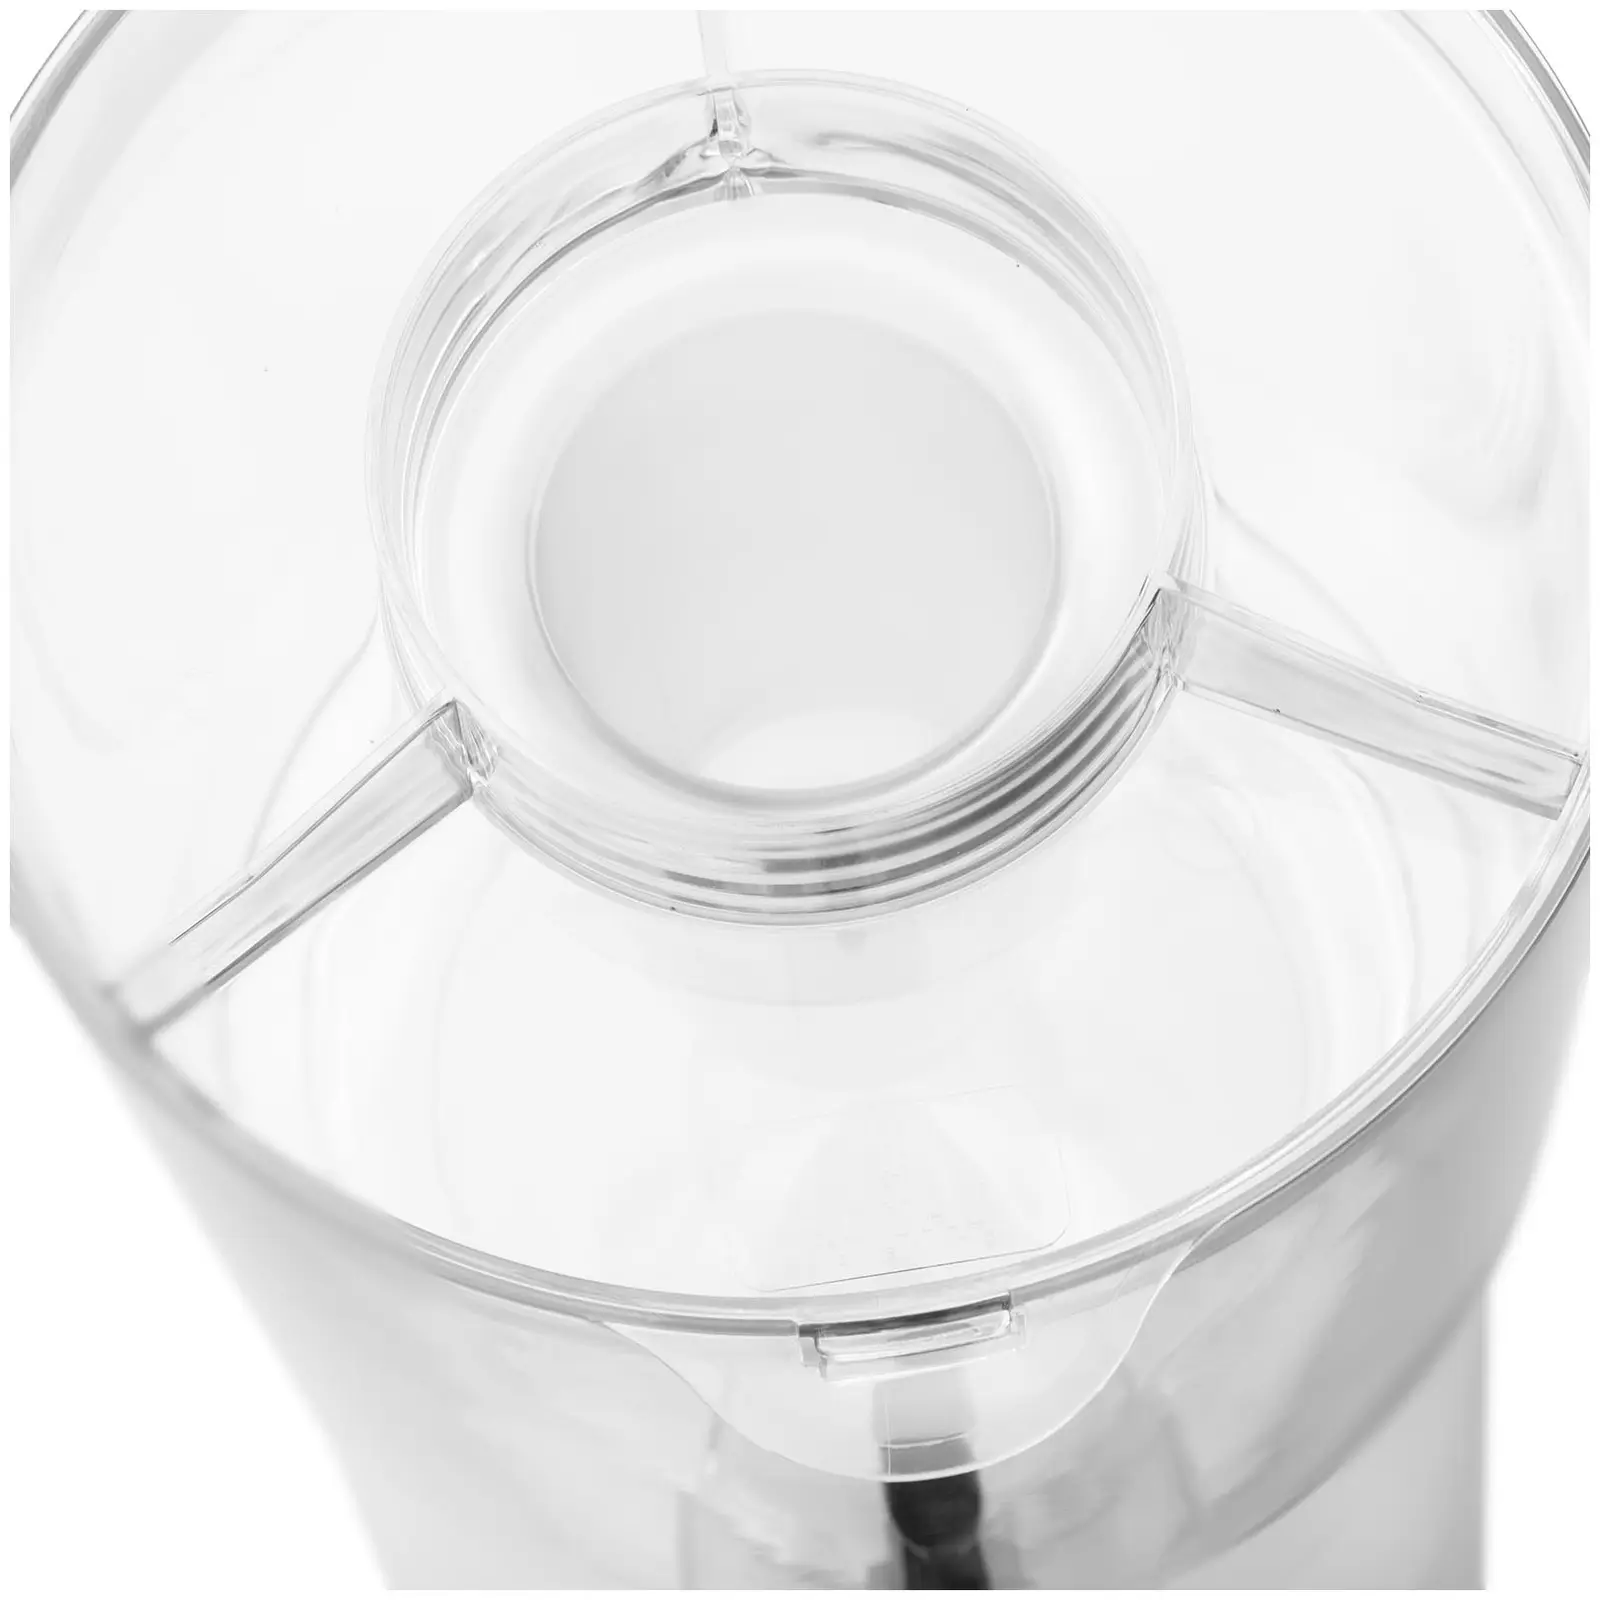 Juice Dispenser - 6.6 L - Plast - Royal Catering